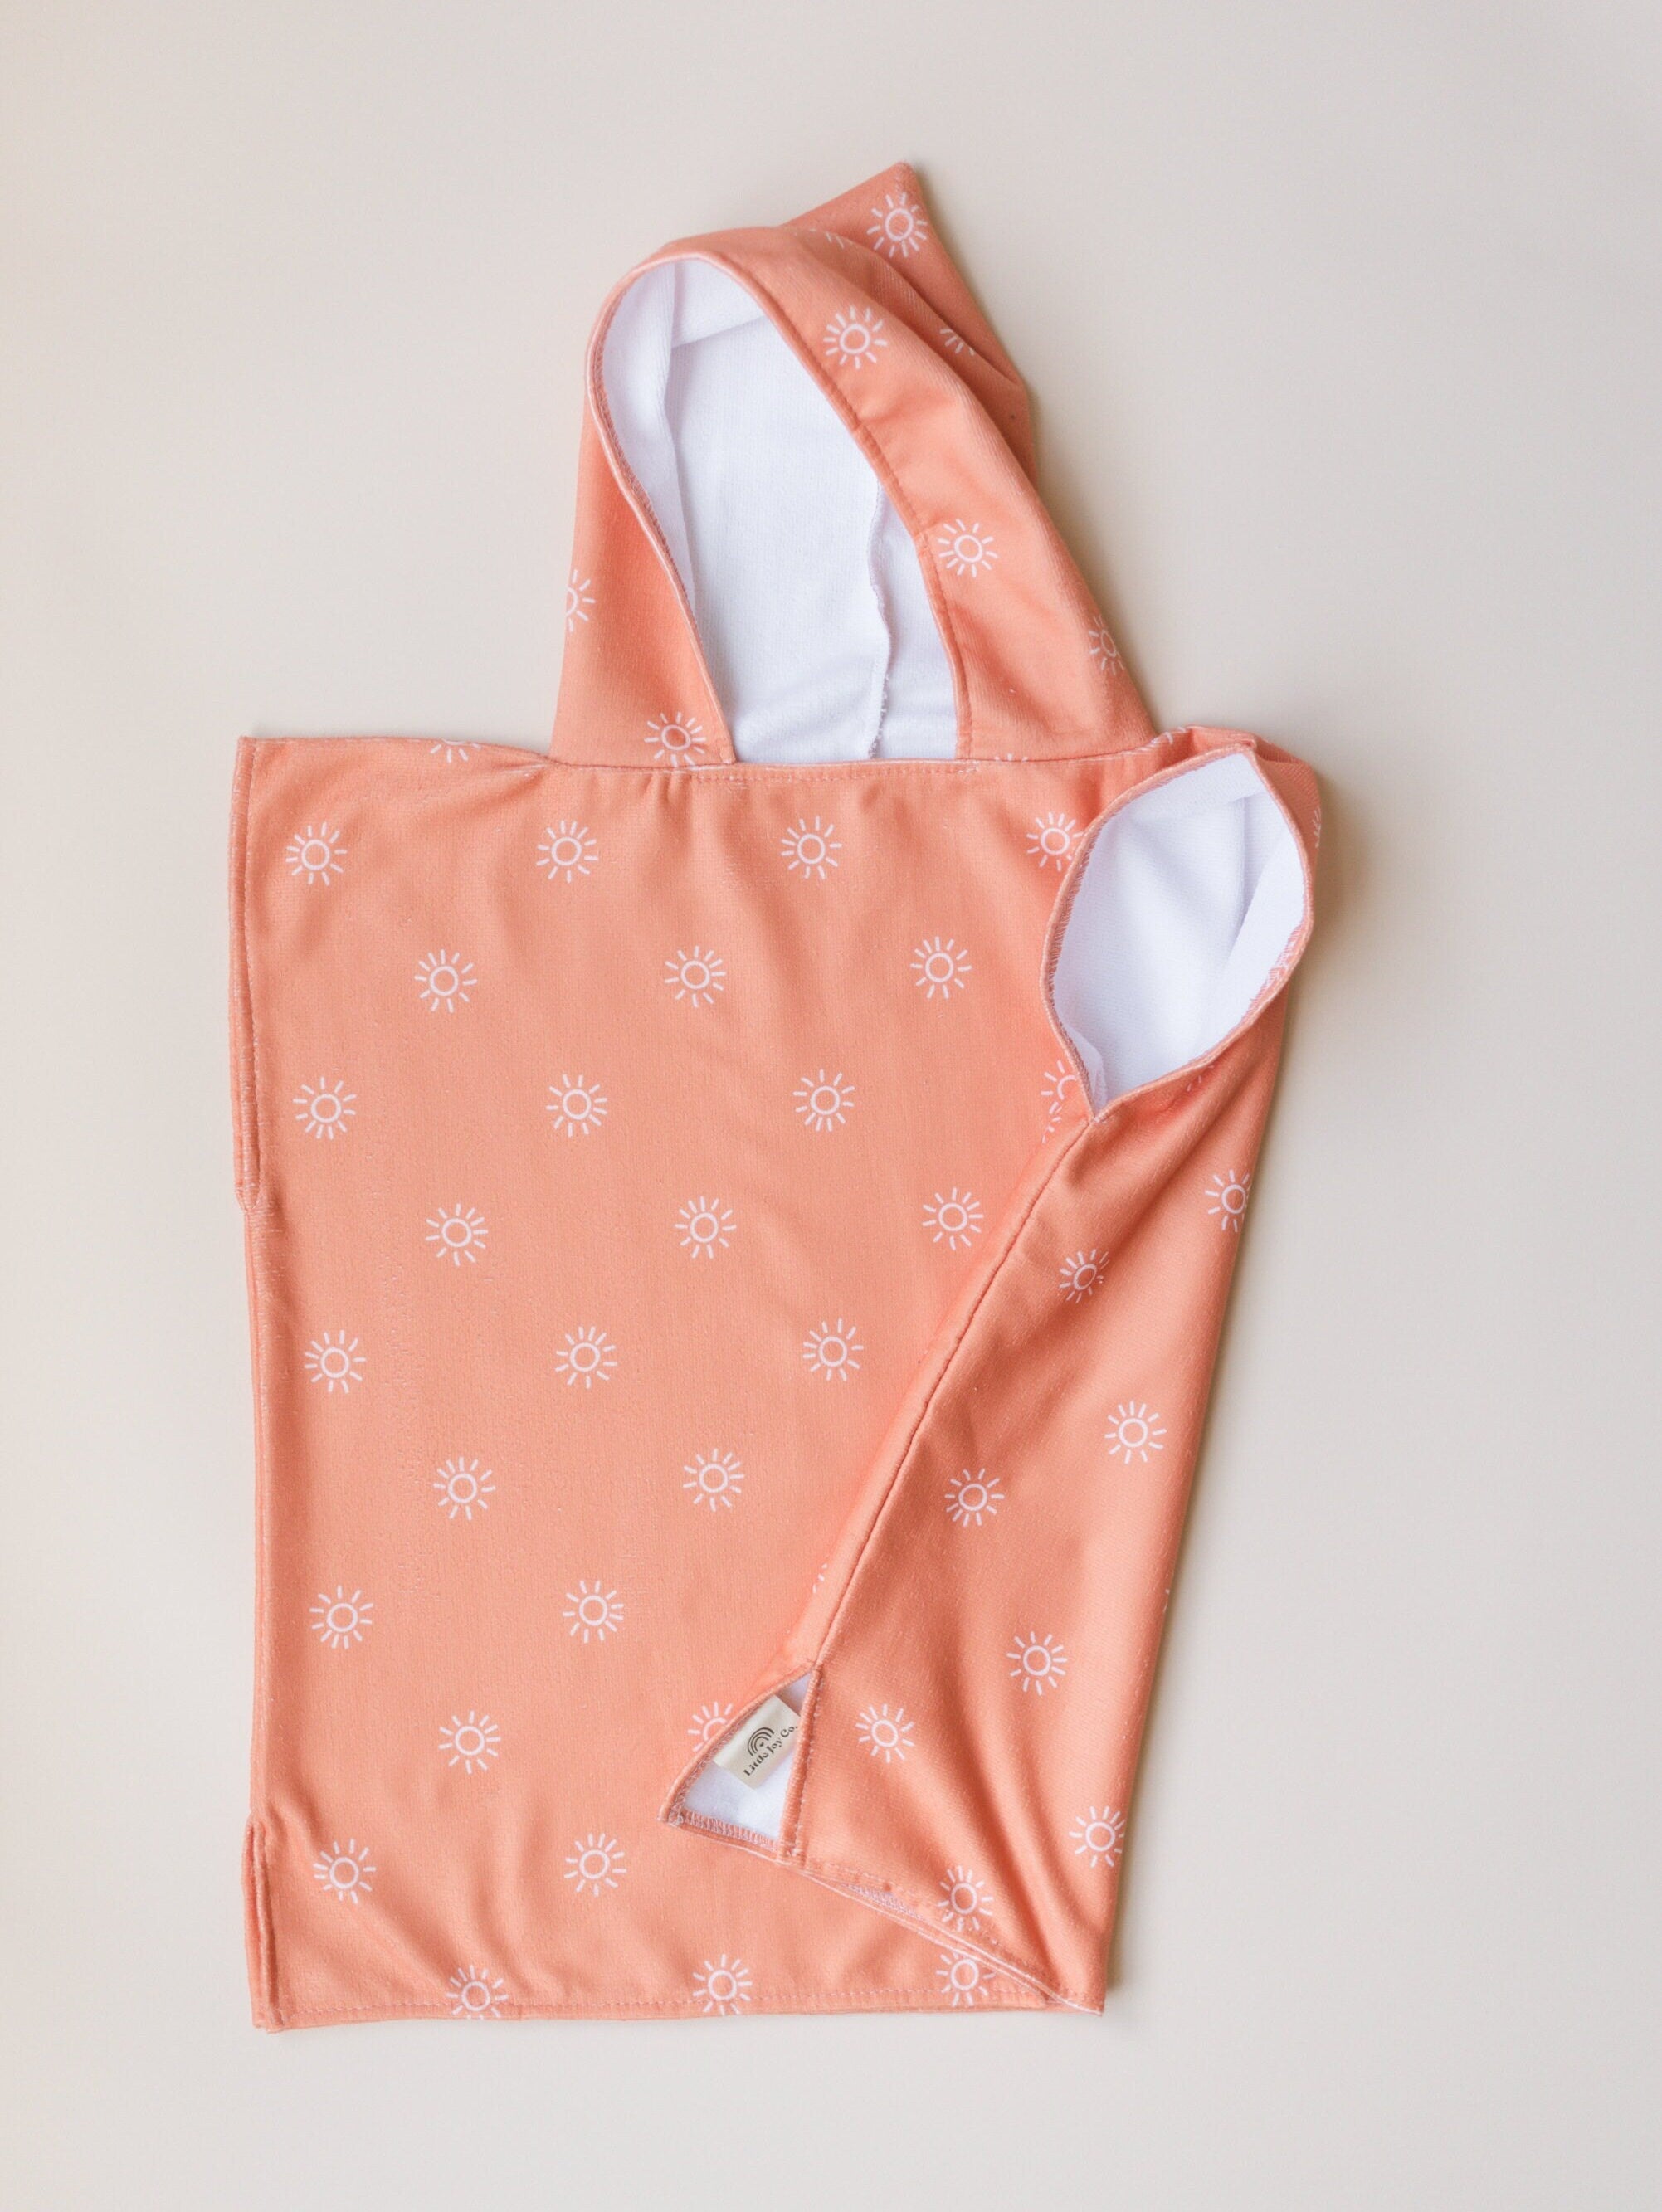 Orange Sun Kids Beach Towel Poncho - Baby Toddler Girl Boy Neutral - Hooded Beach Towel - Microfiber Bath Towel